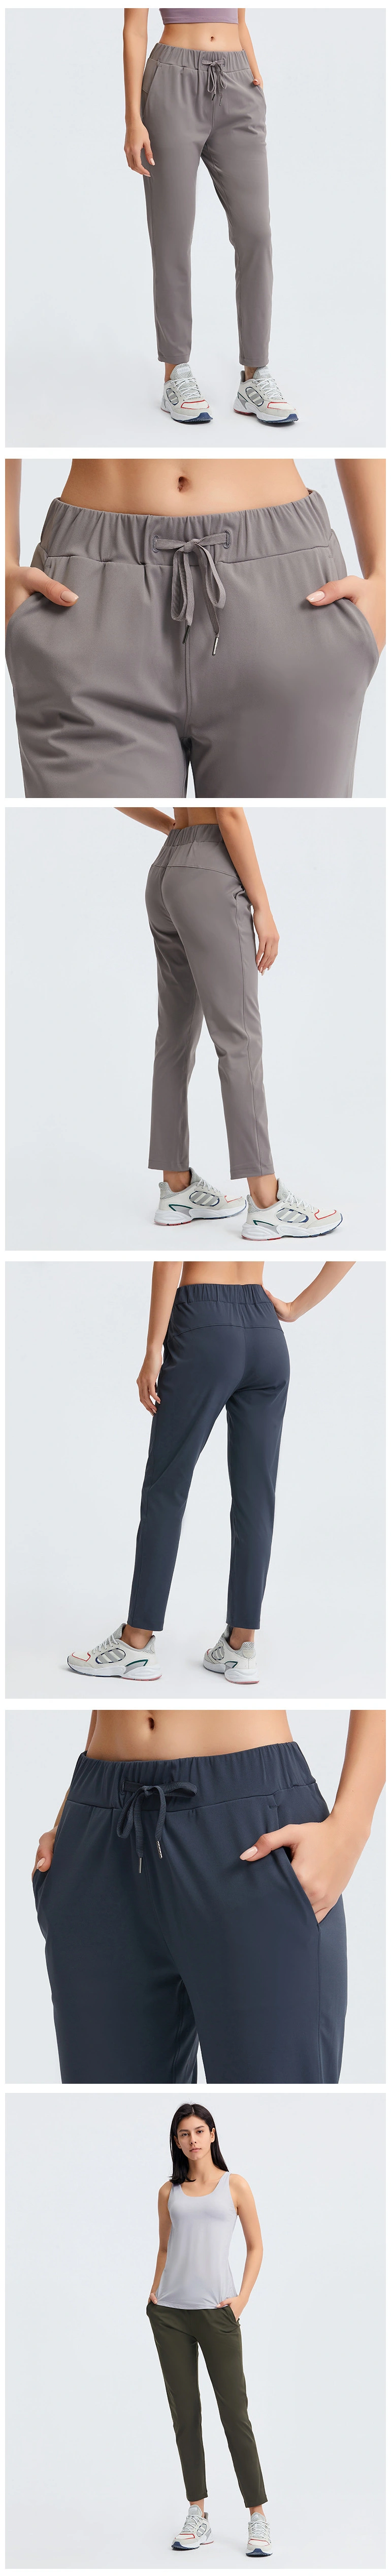 OEM&ODM Wholesale Active Sports Wear Women Legging Fitness Women Clothing Workout Activewear Pocket Yoga Pants